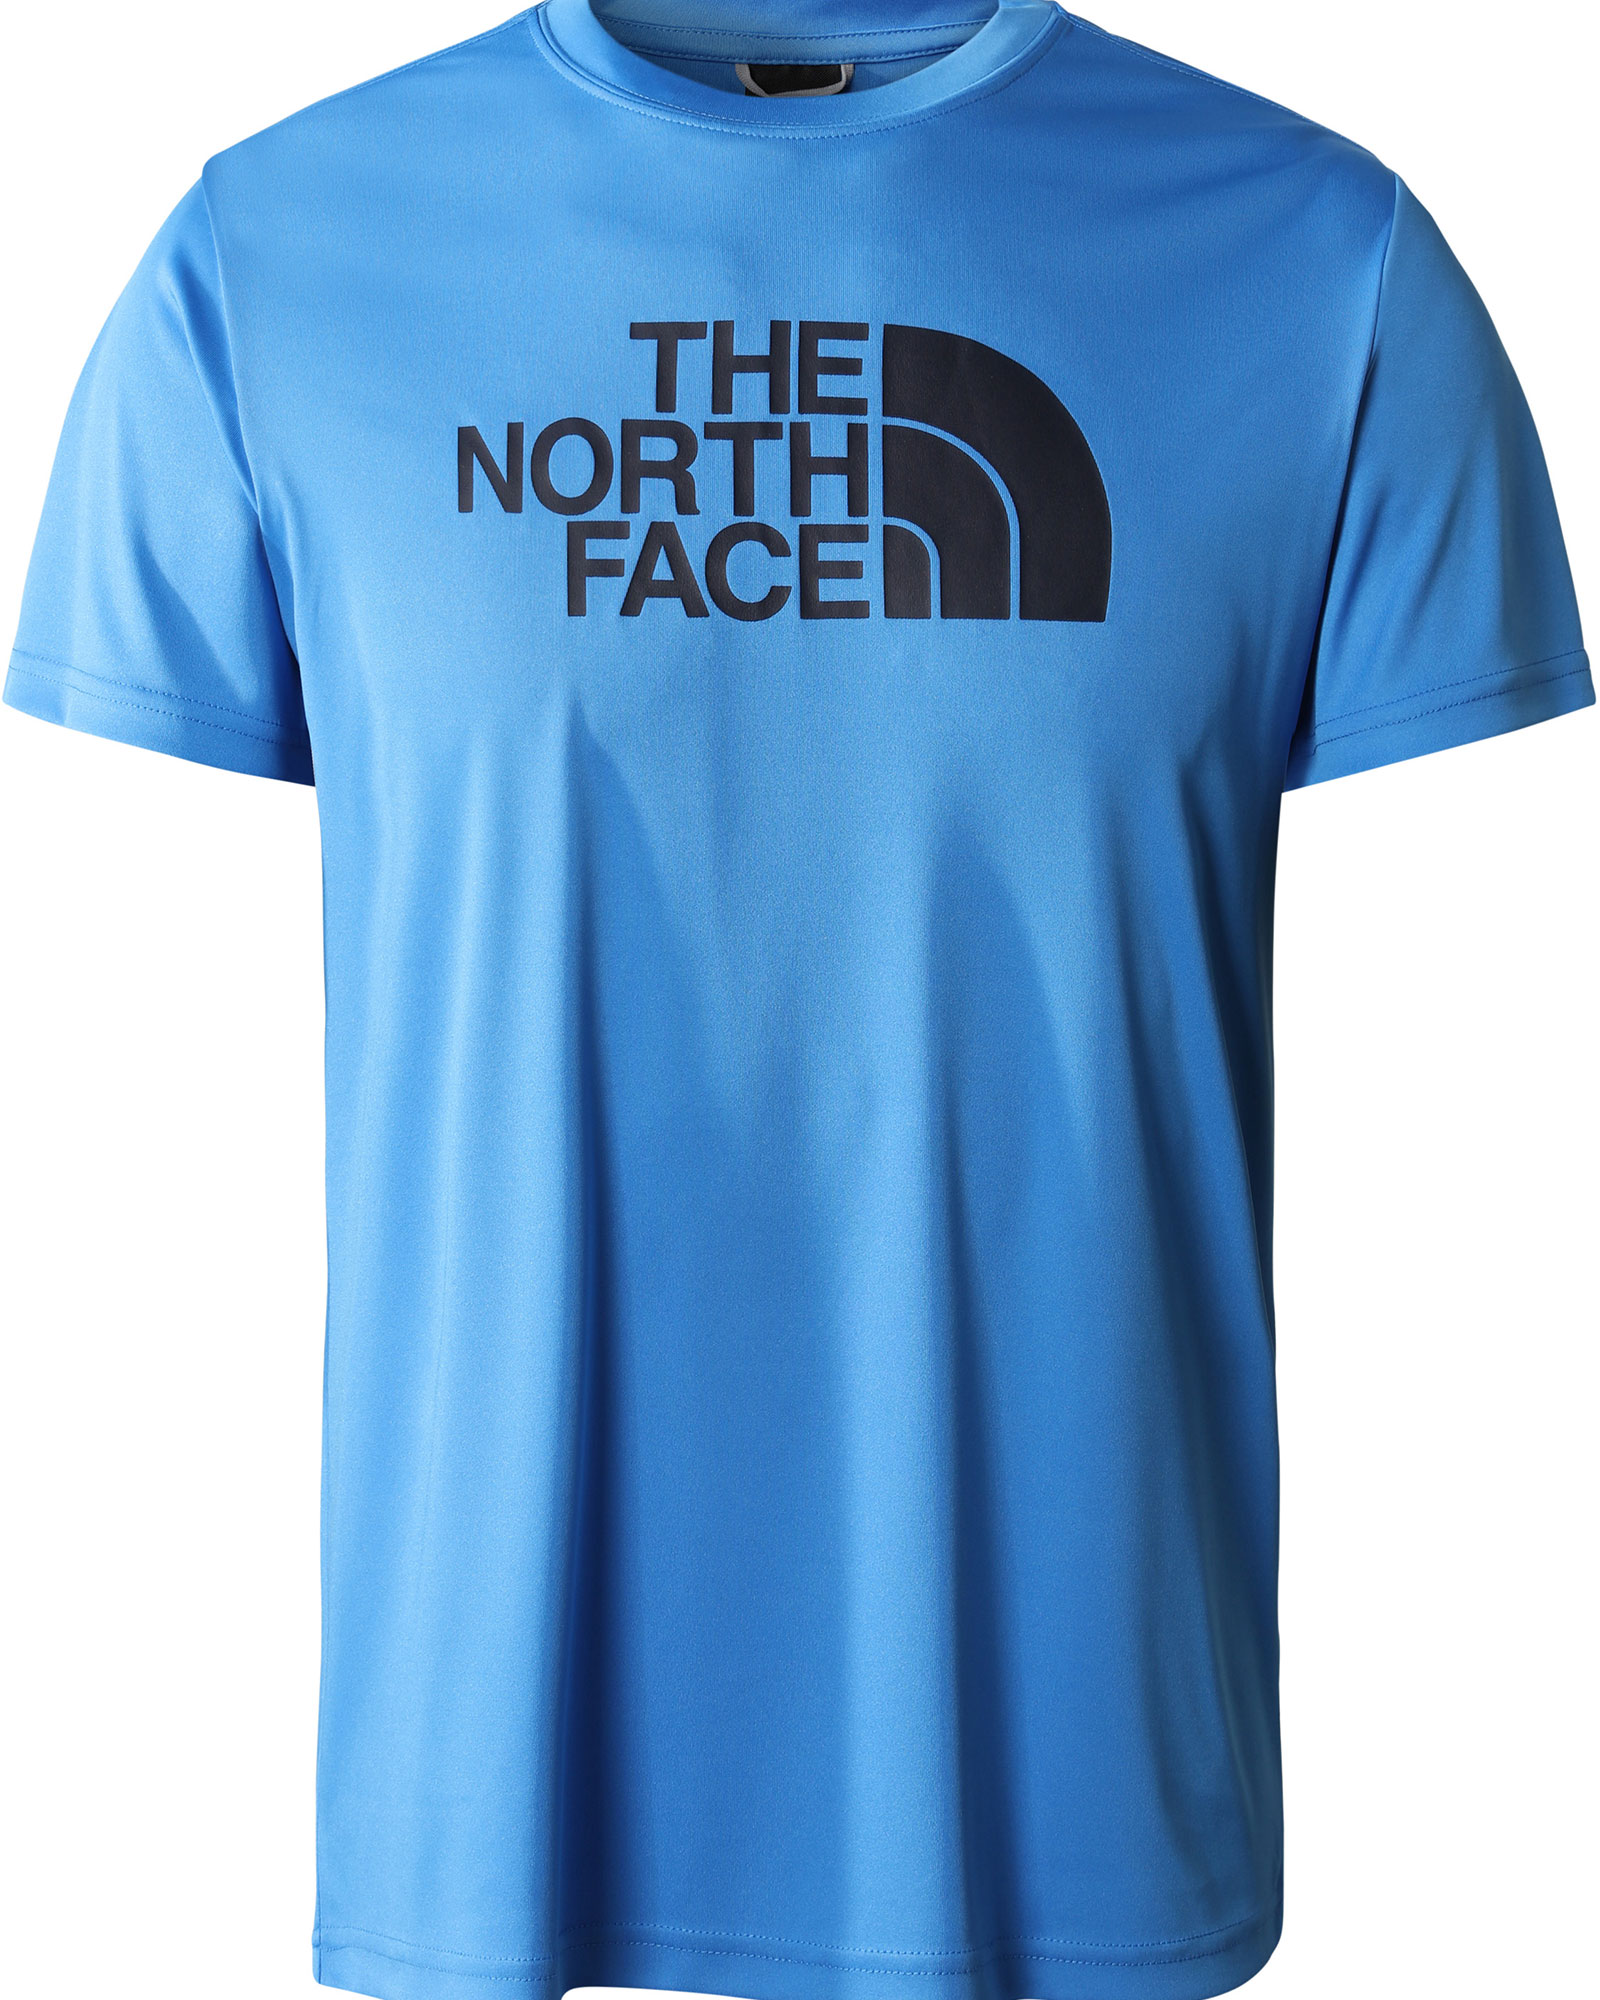 The North Face Reaxion Easy Men’s T Shirt - Super Sonic Blue L